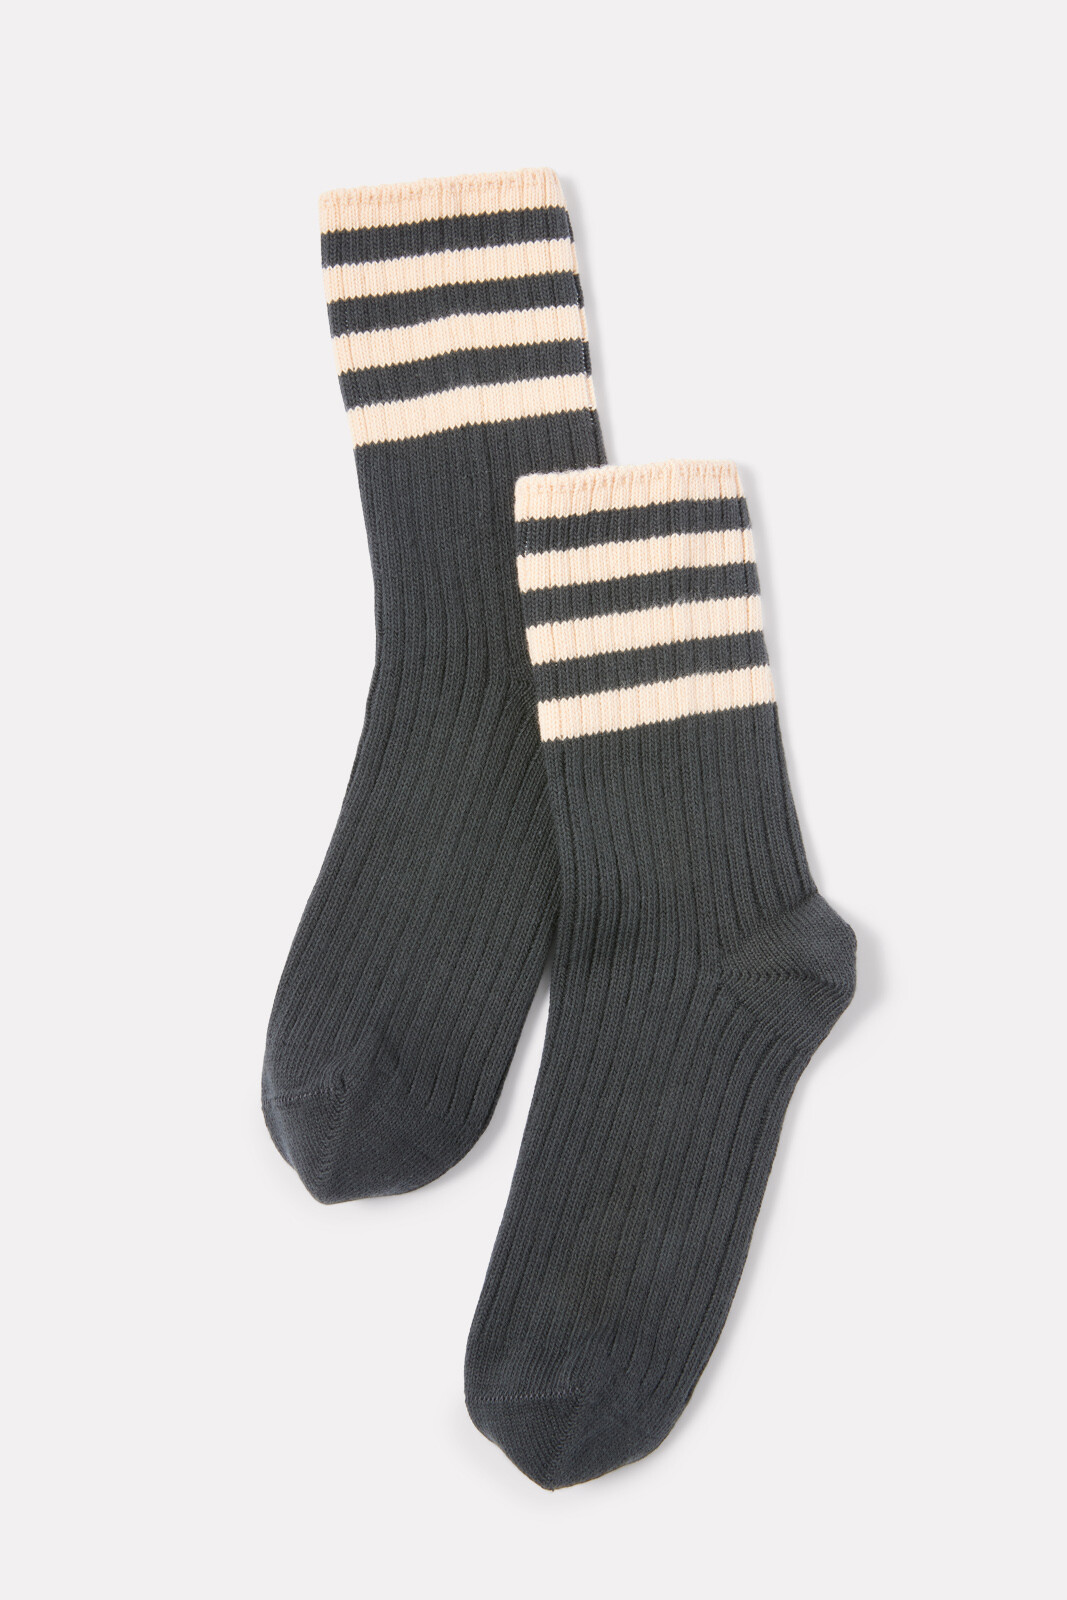 Lexi Striped Socks